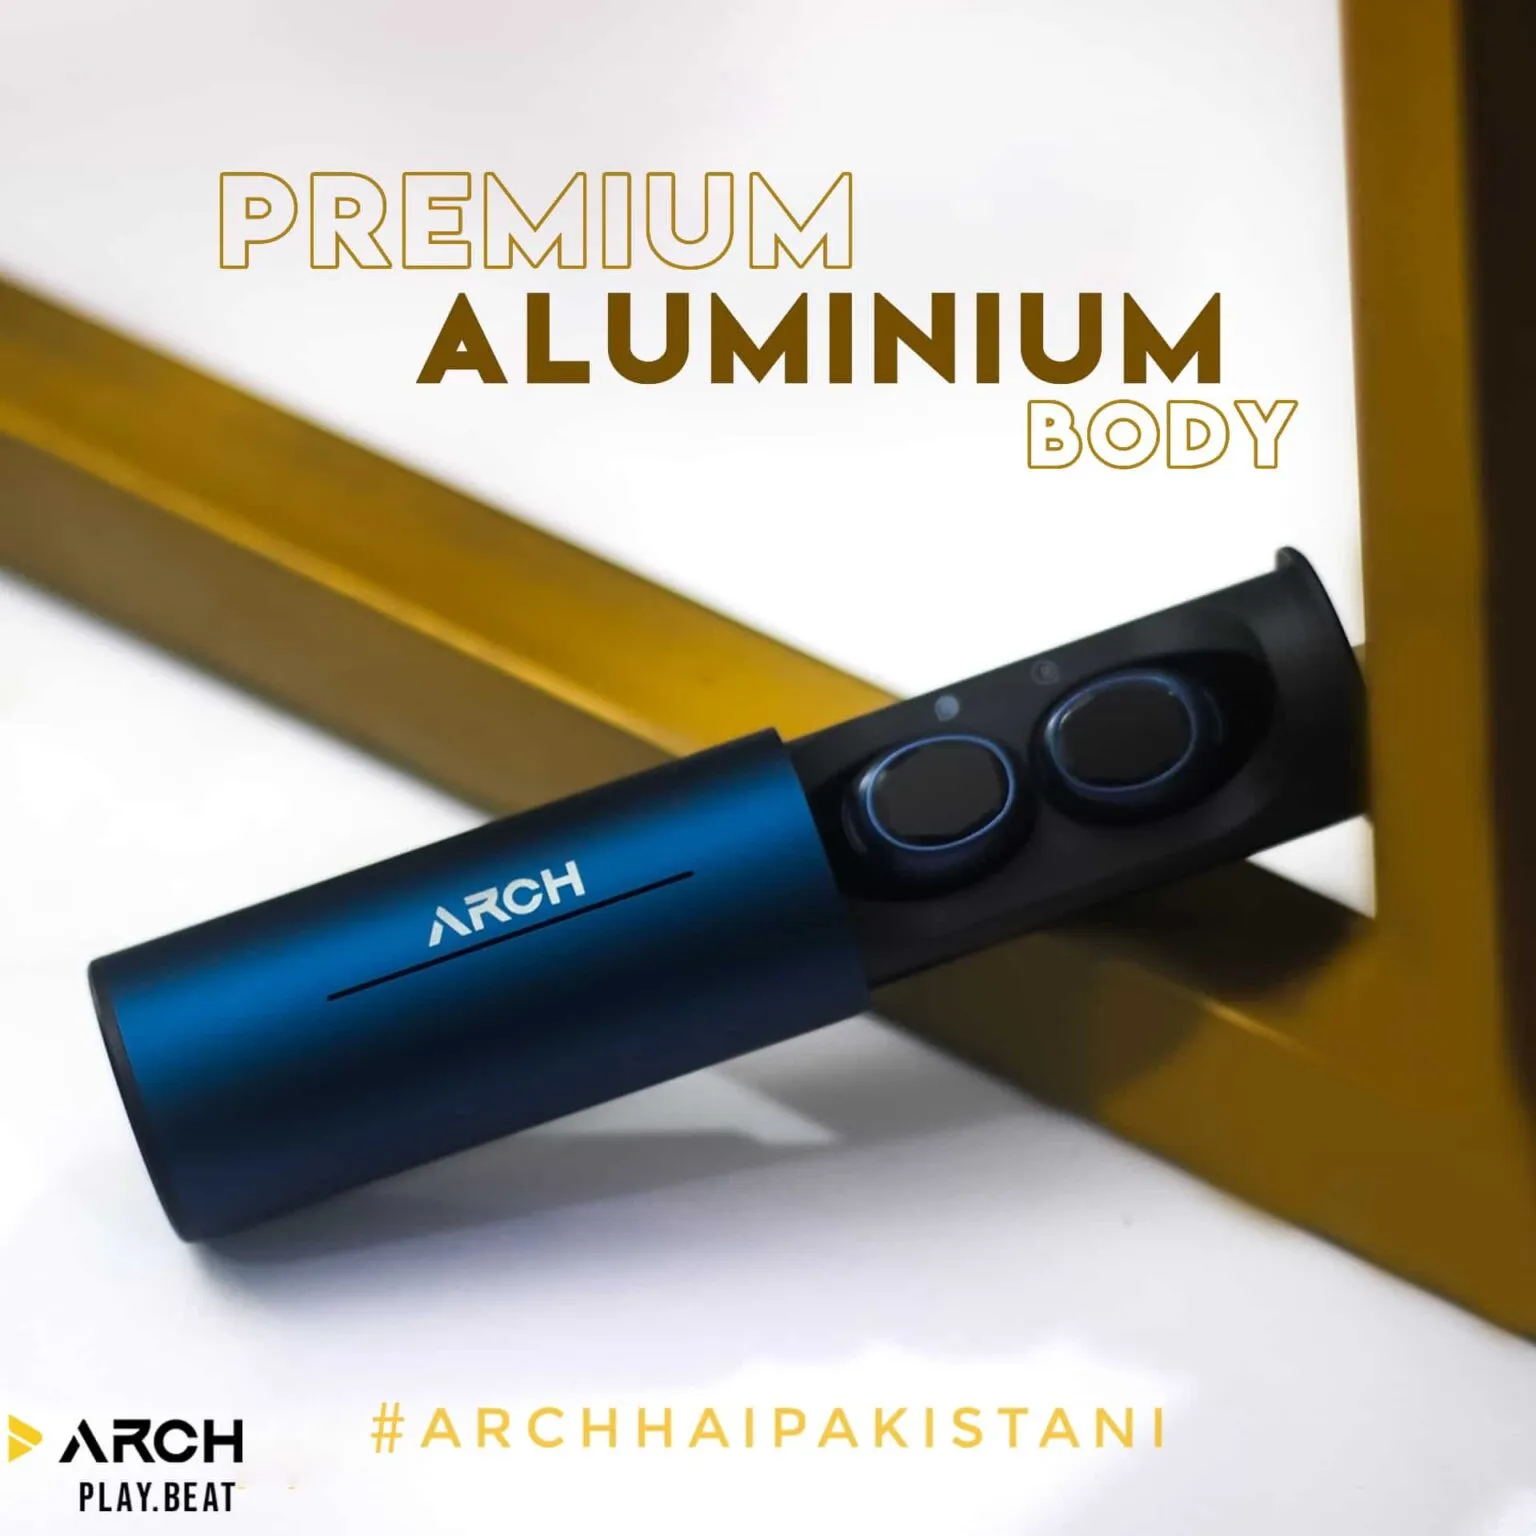 Buy arch beat wireless earbuds, capsule shape earbuds by sound stream earphones at best price in pakistan| Rhizmall.pk